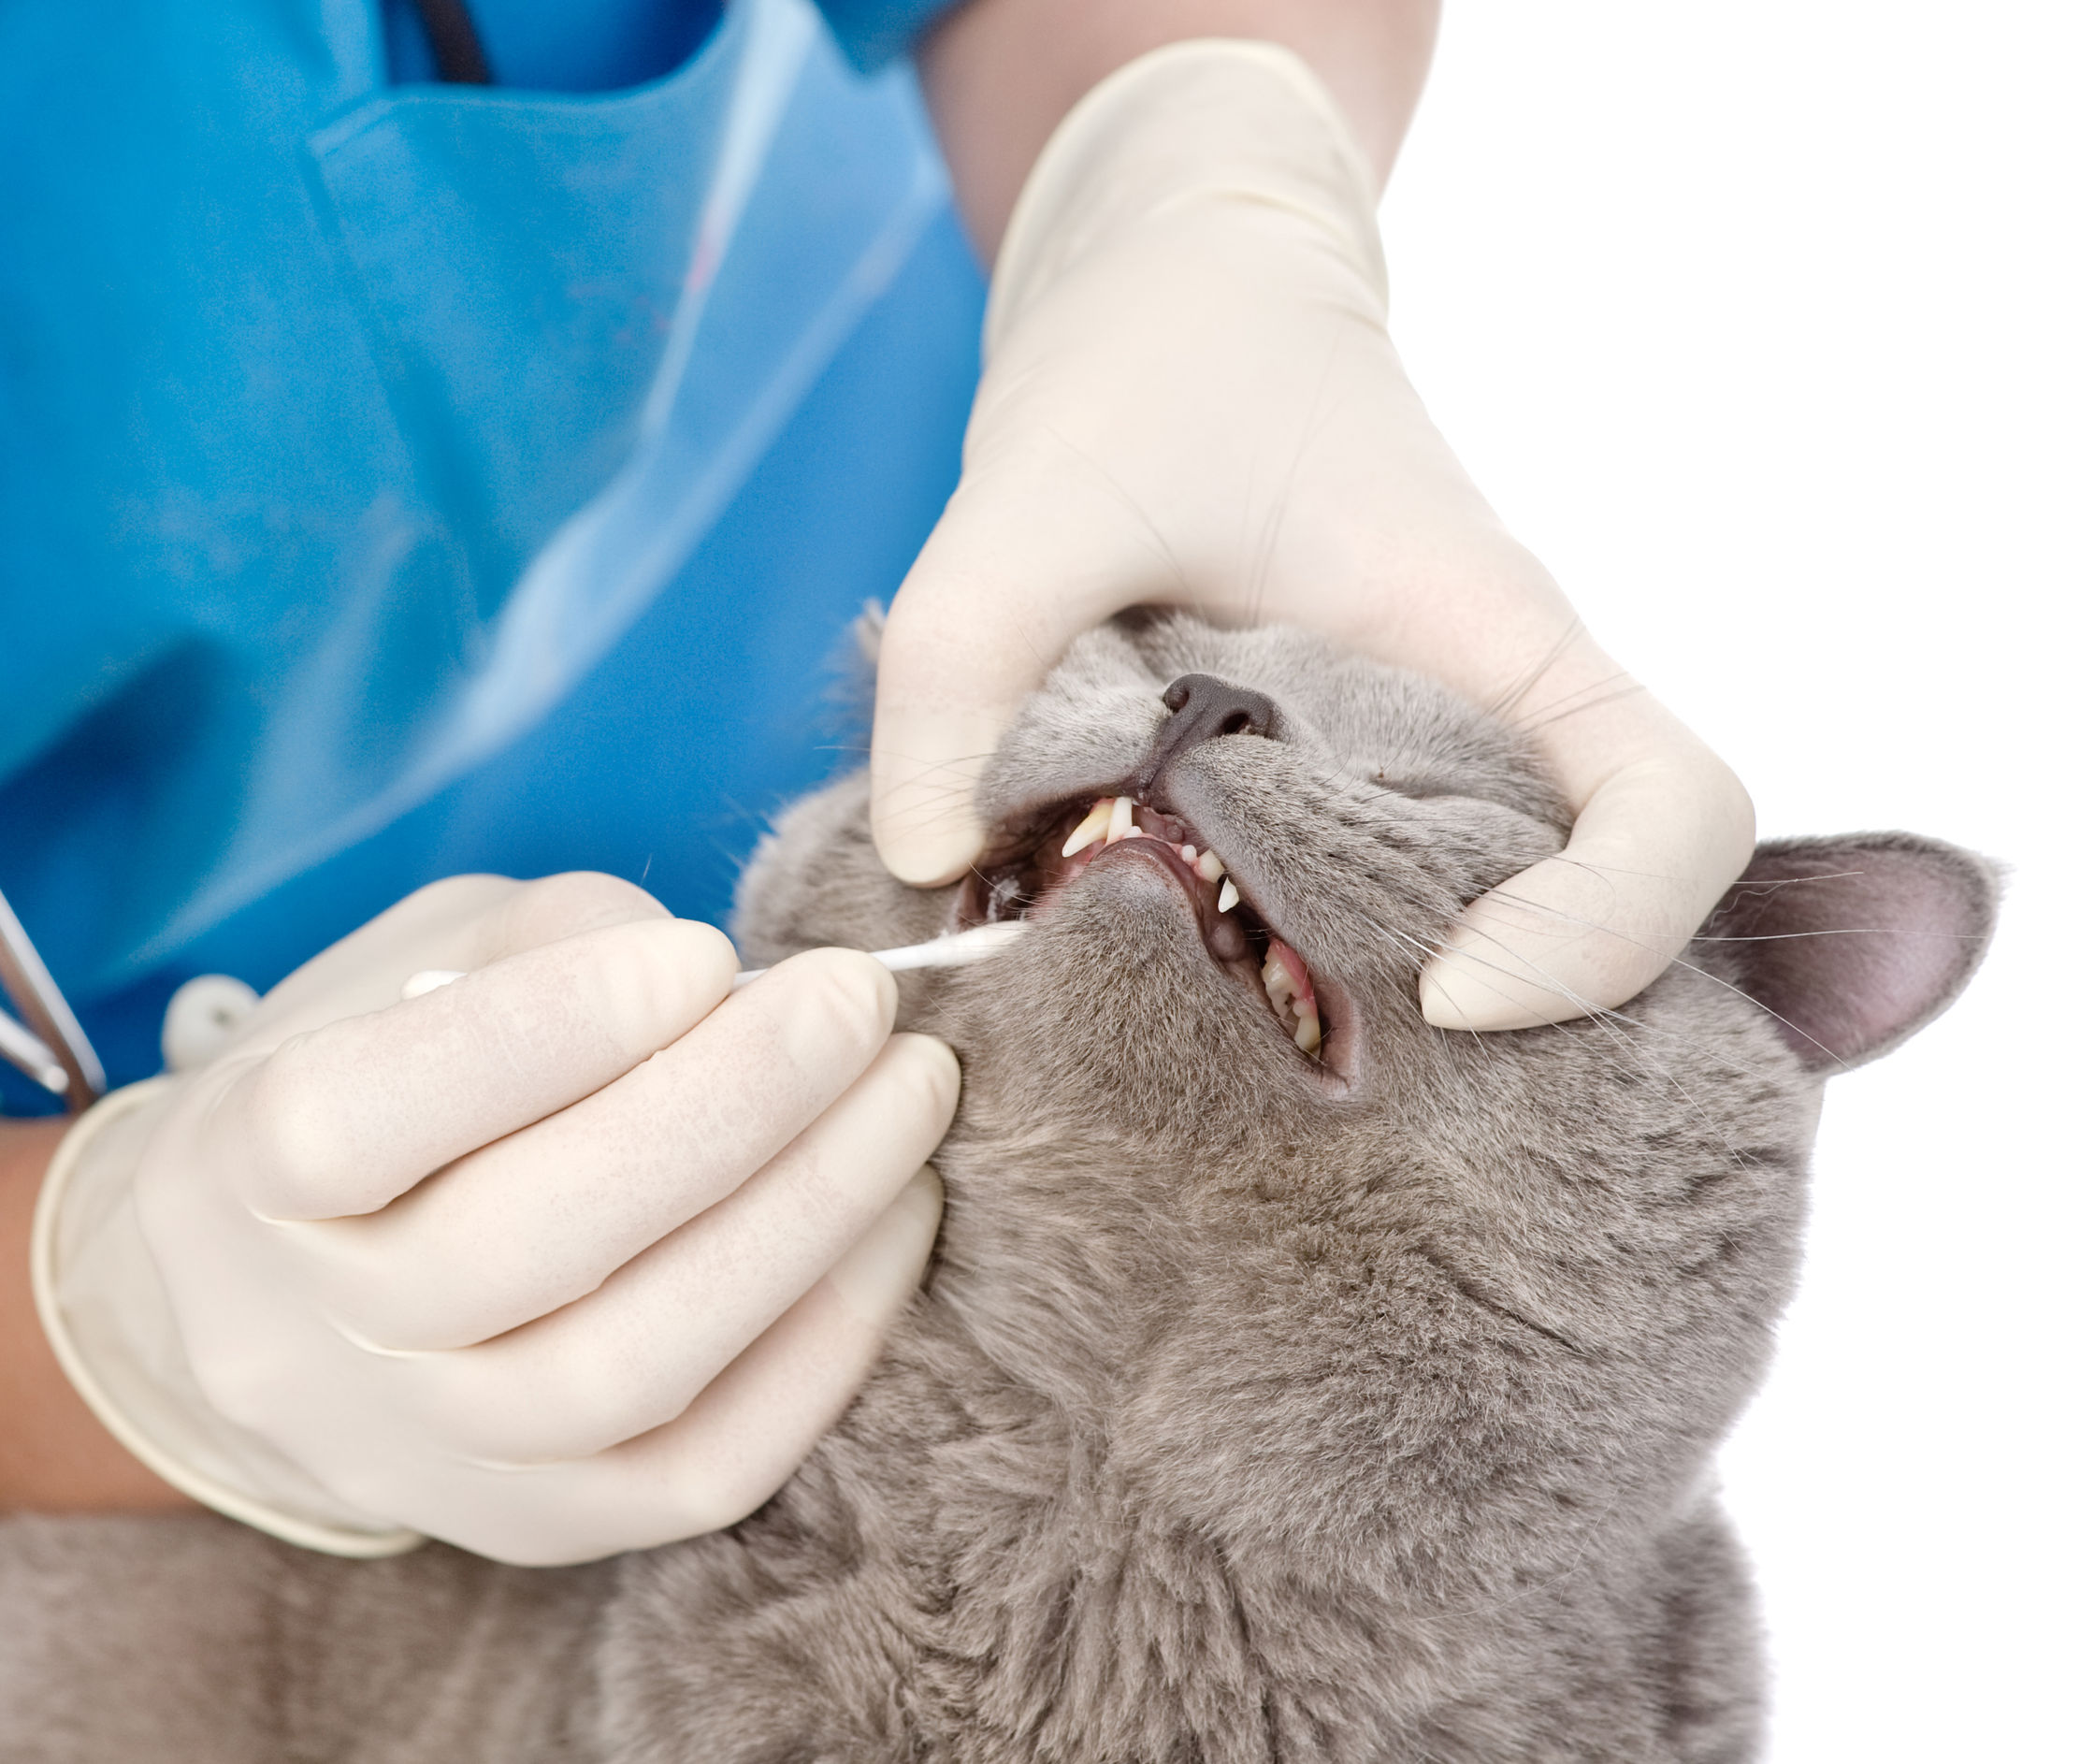 vet checks teeth of a cat